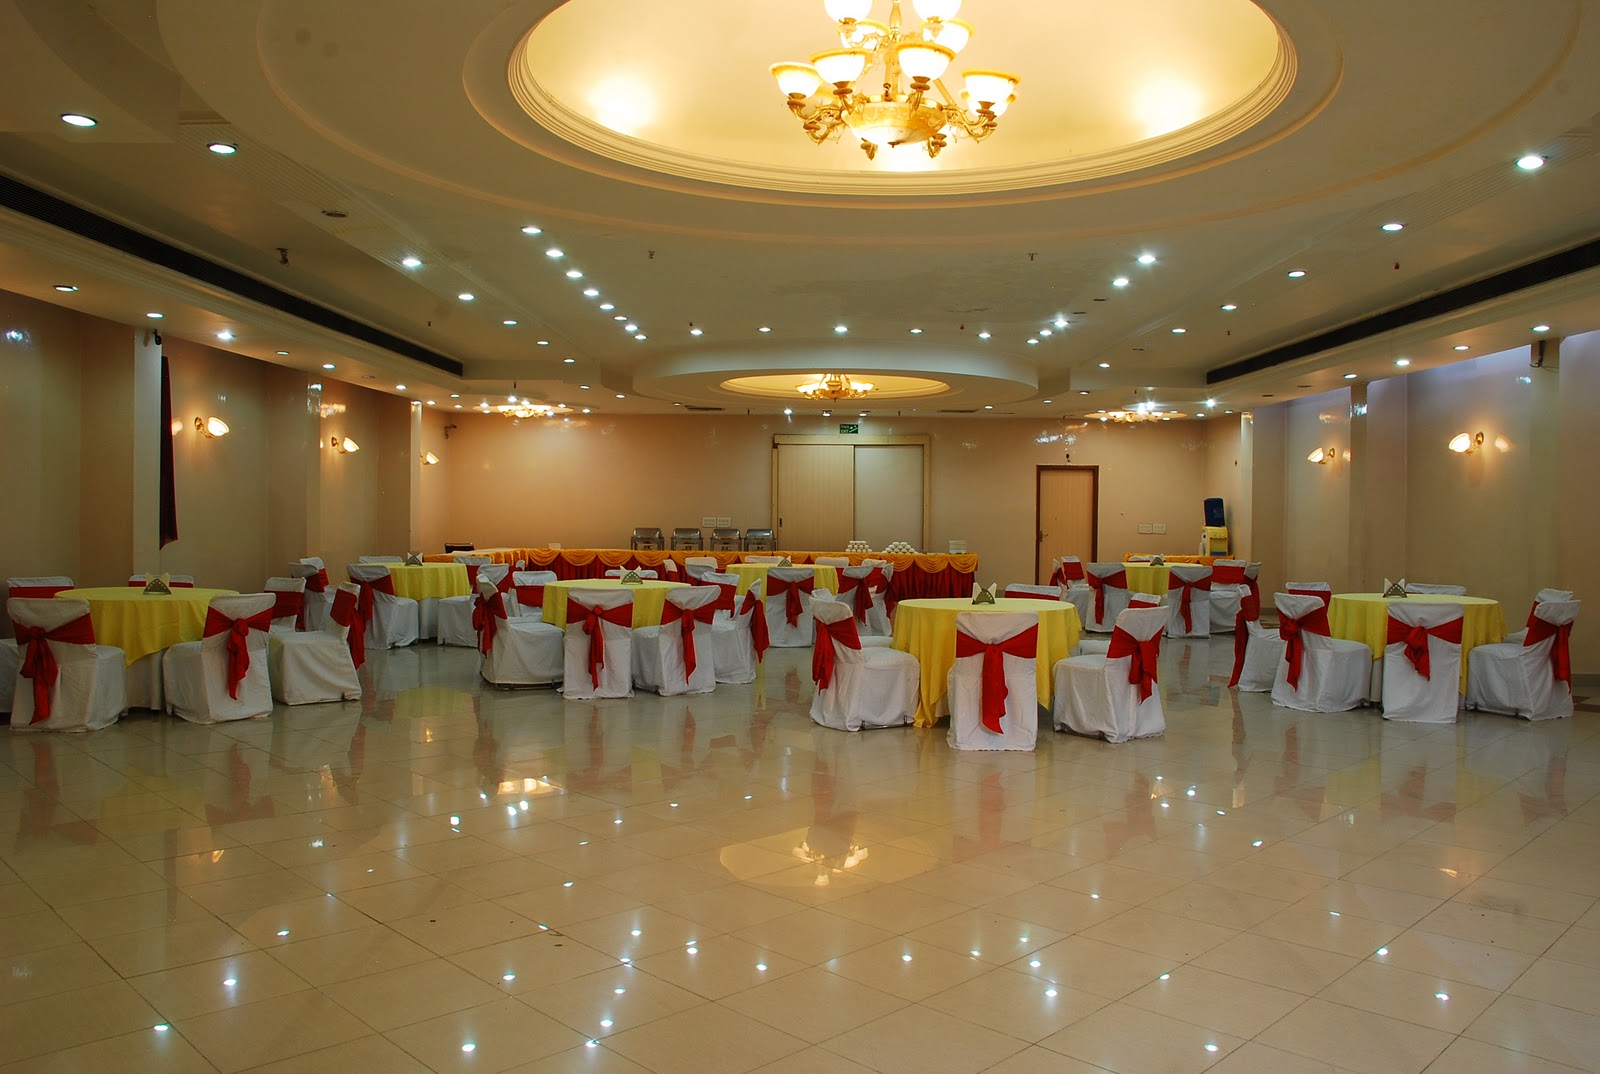 Banquet Halls for Parties